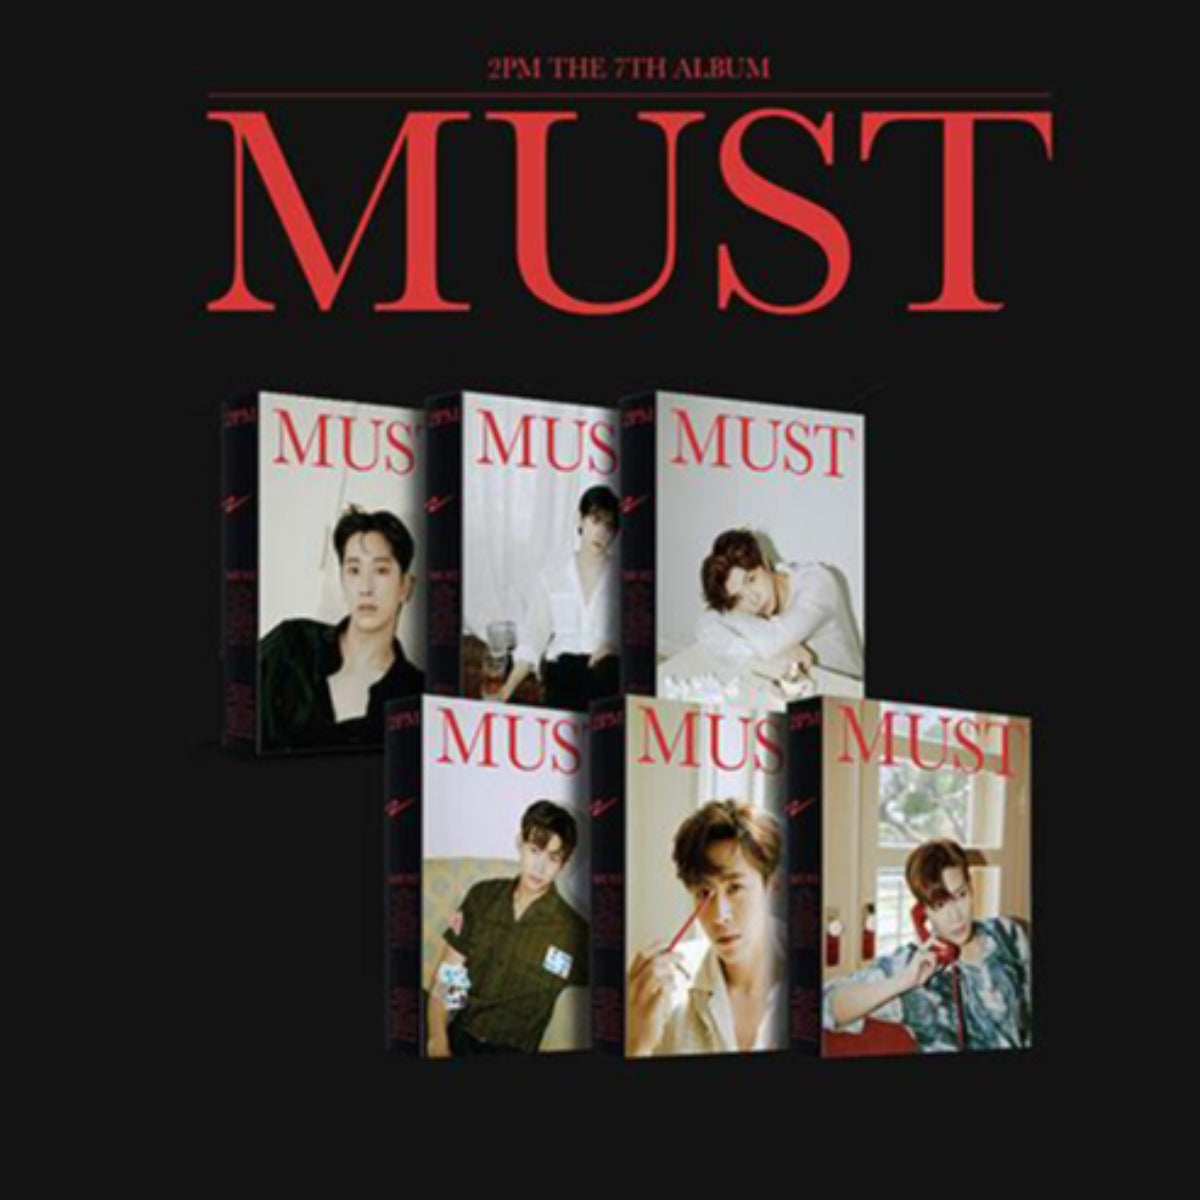 2PM Vol. 7 - MUST (Random Version) (Limited Edition)